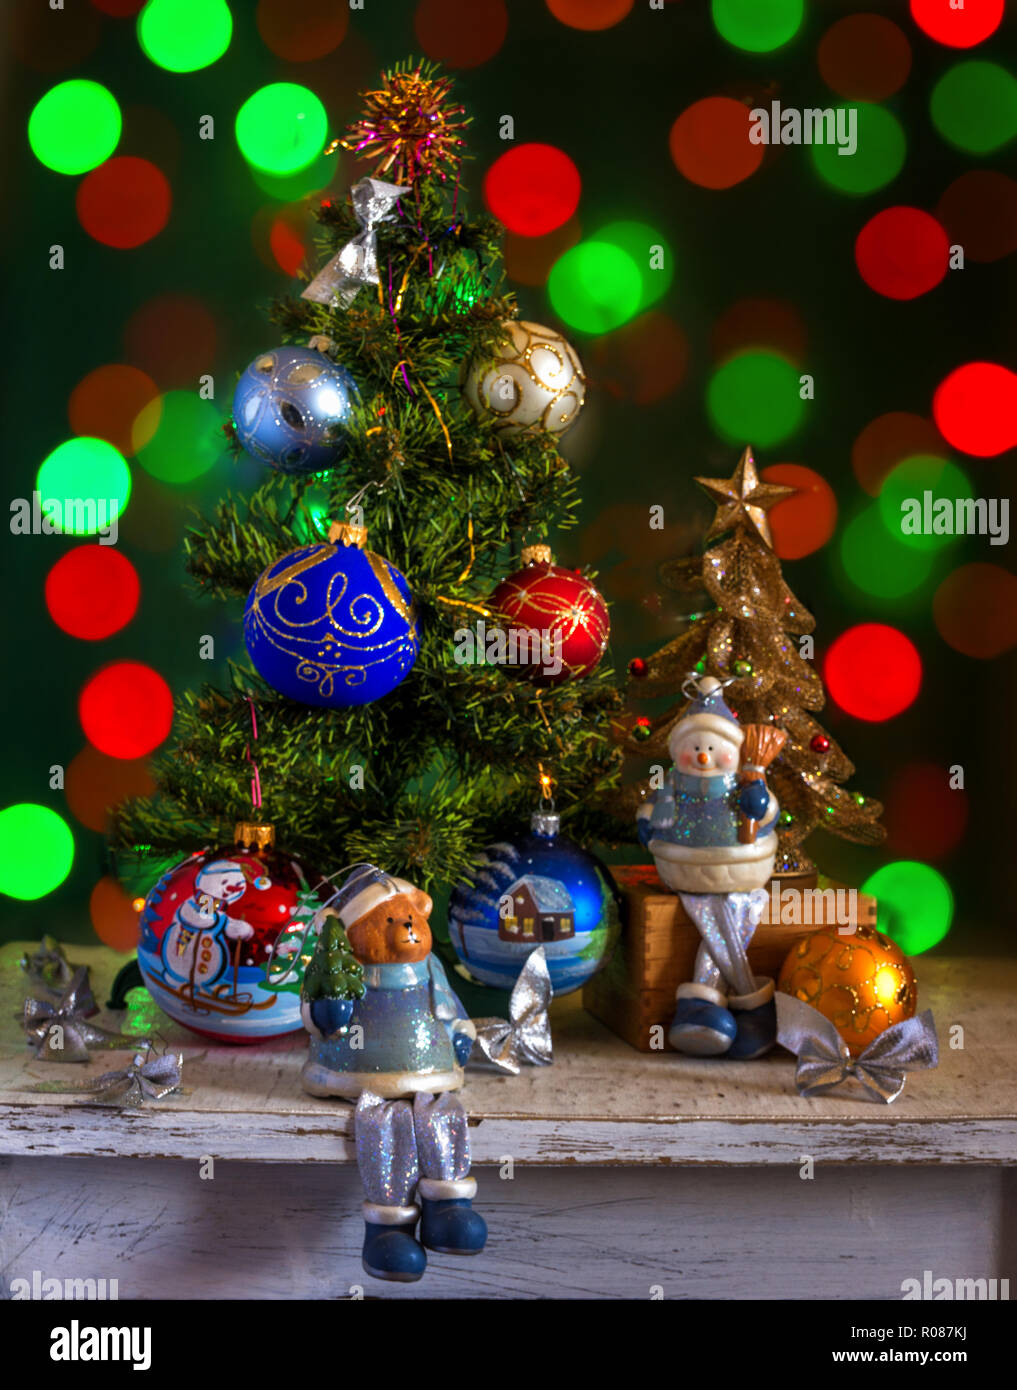 New Year. Christmas. fun. fairy tale. celebration. Christmas decorations. Stock Photo